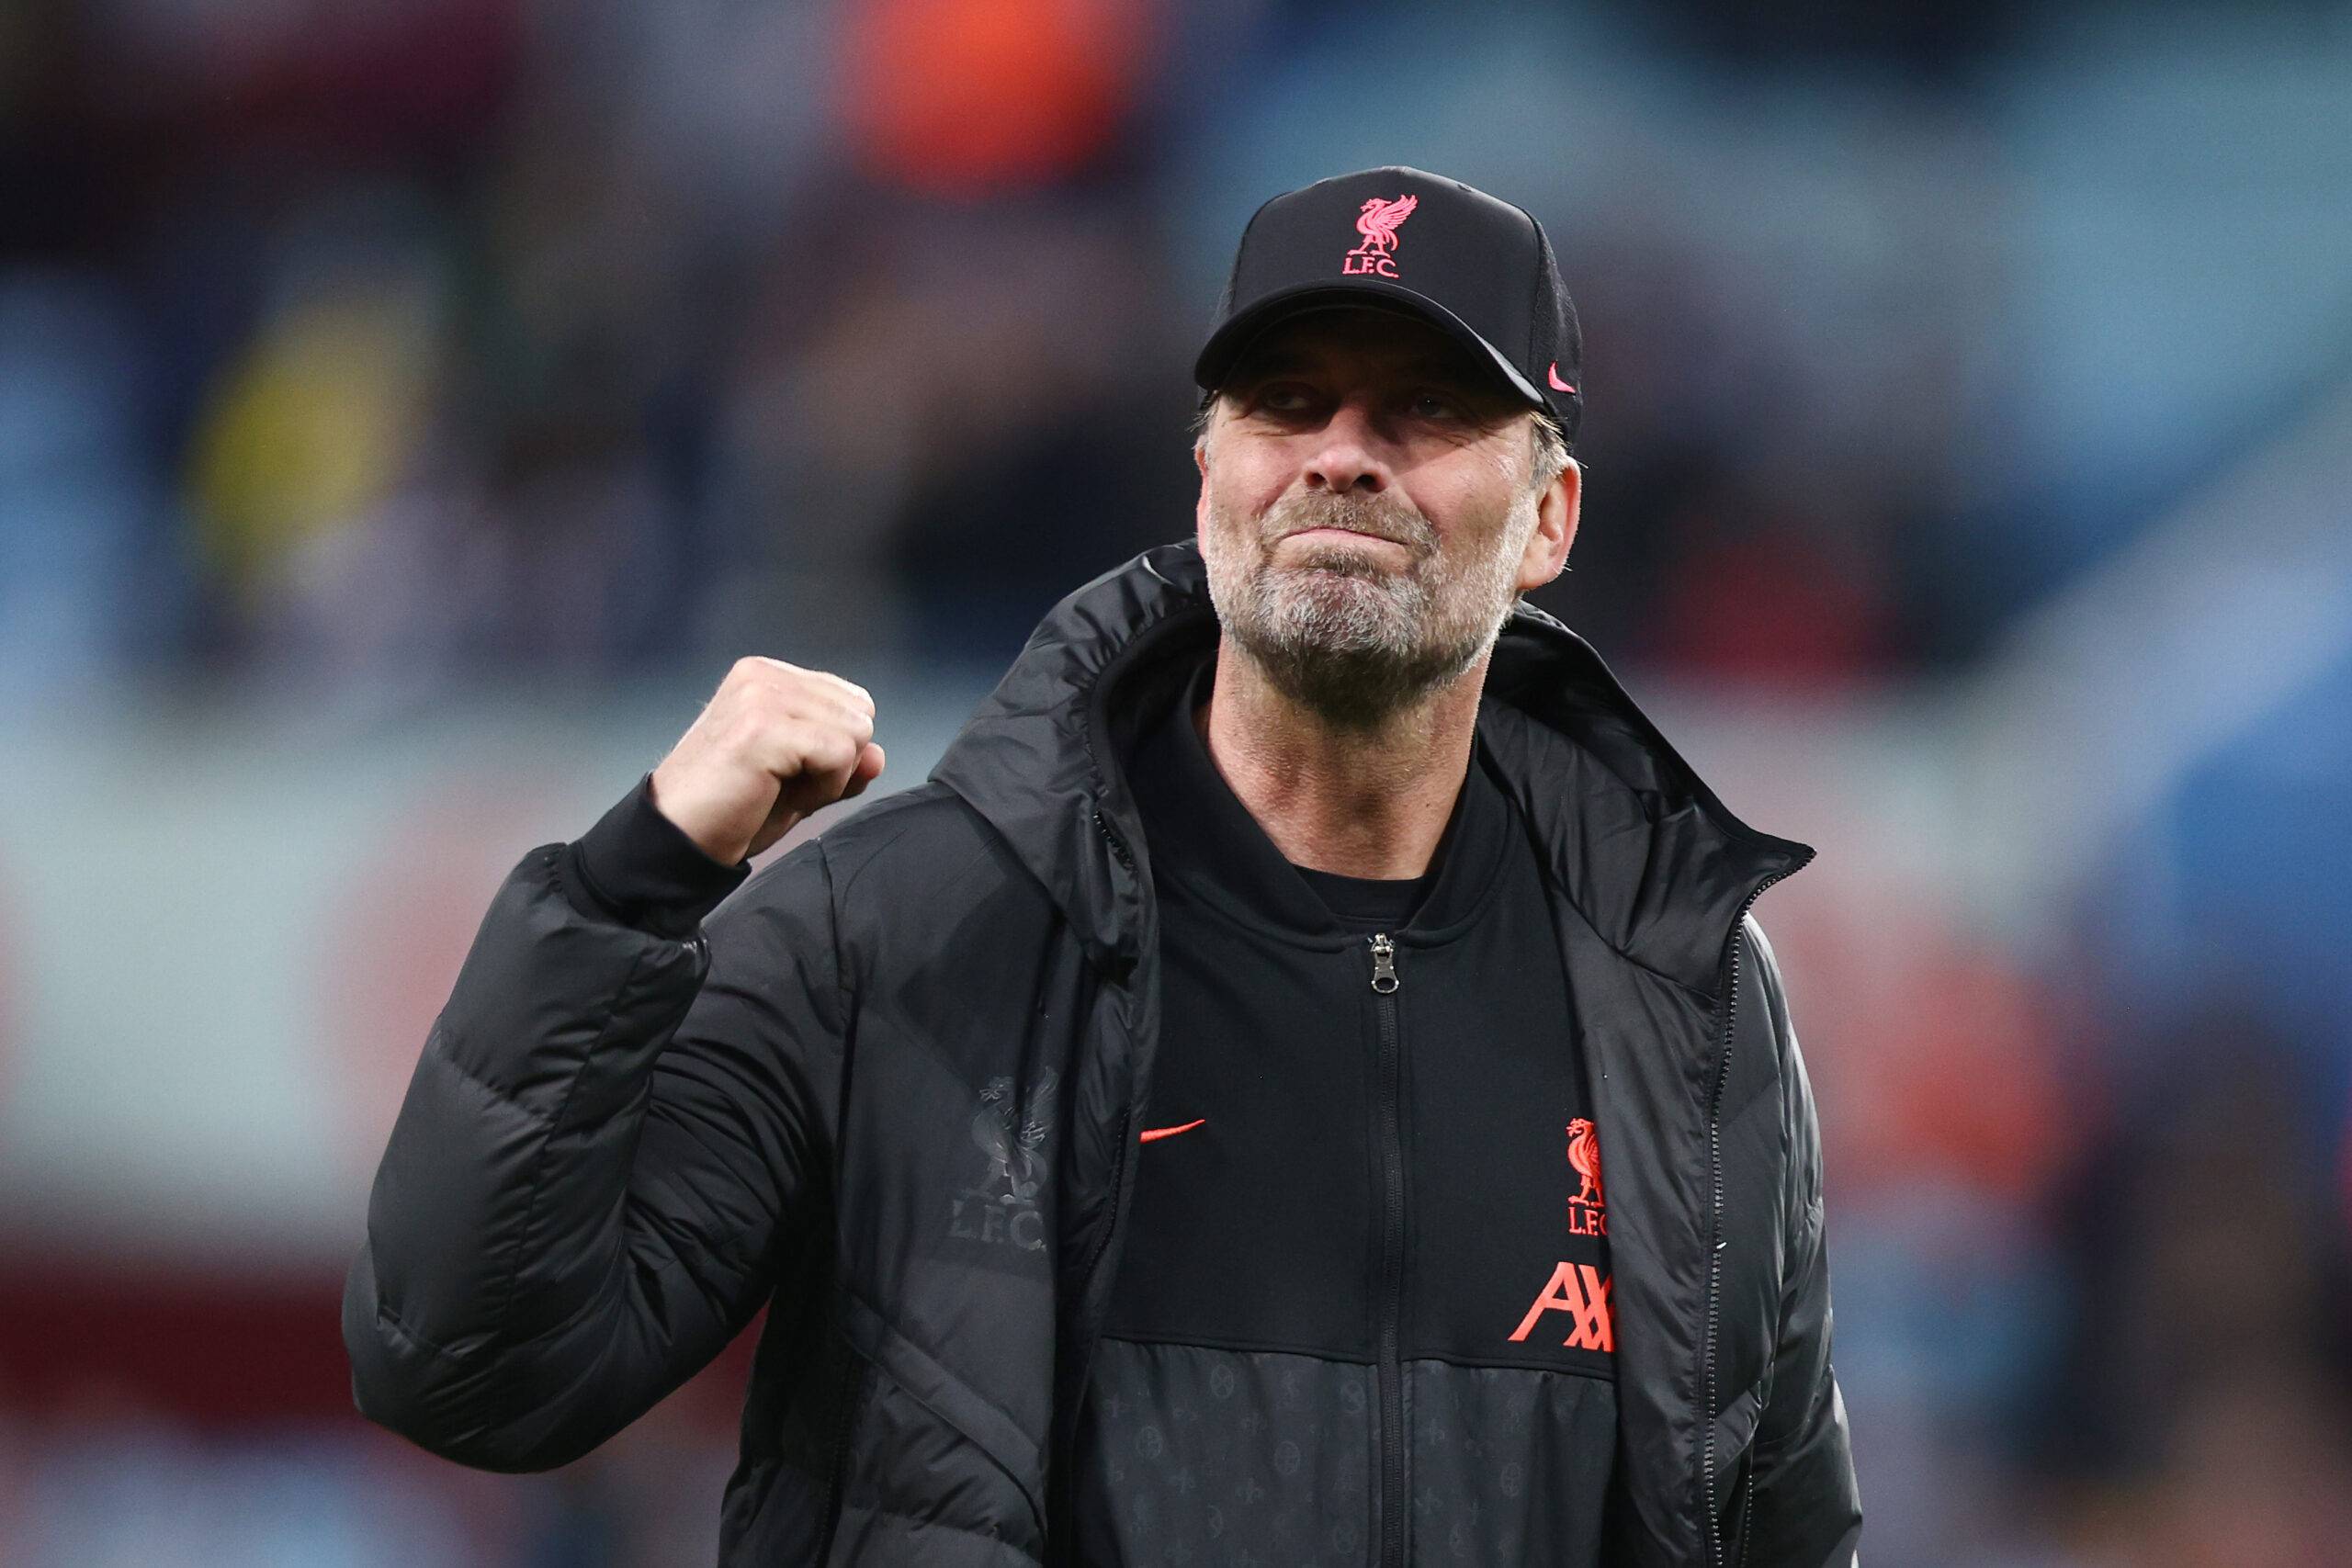 Jurgen Klopp, manager of Liverpool, celebrates